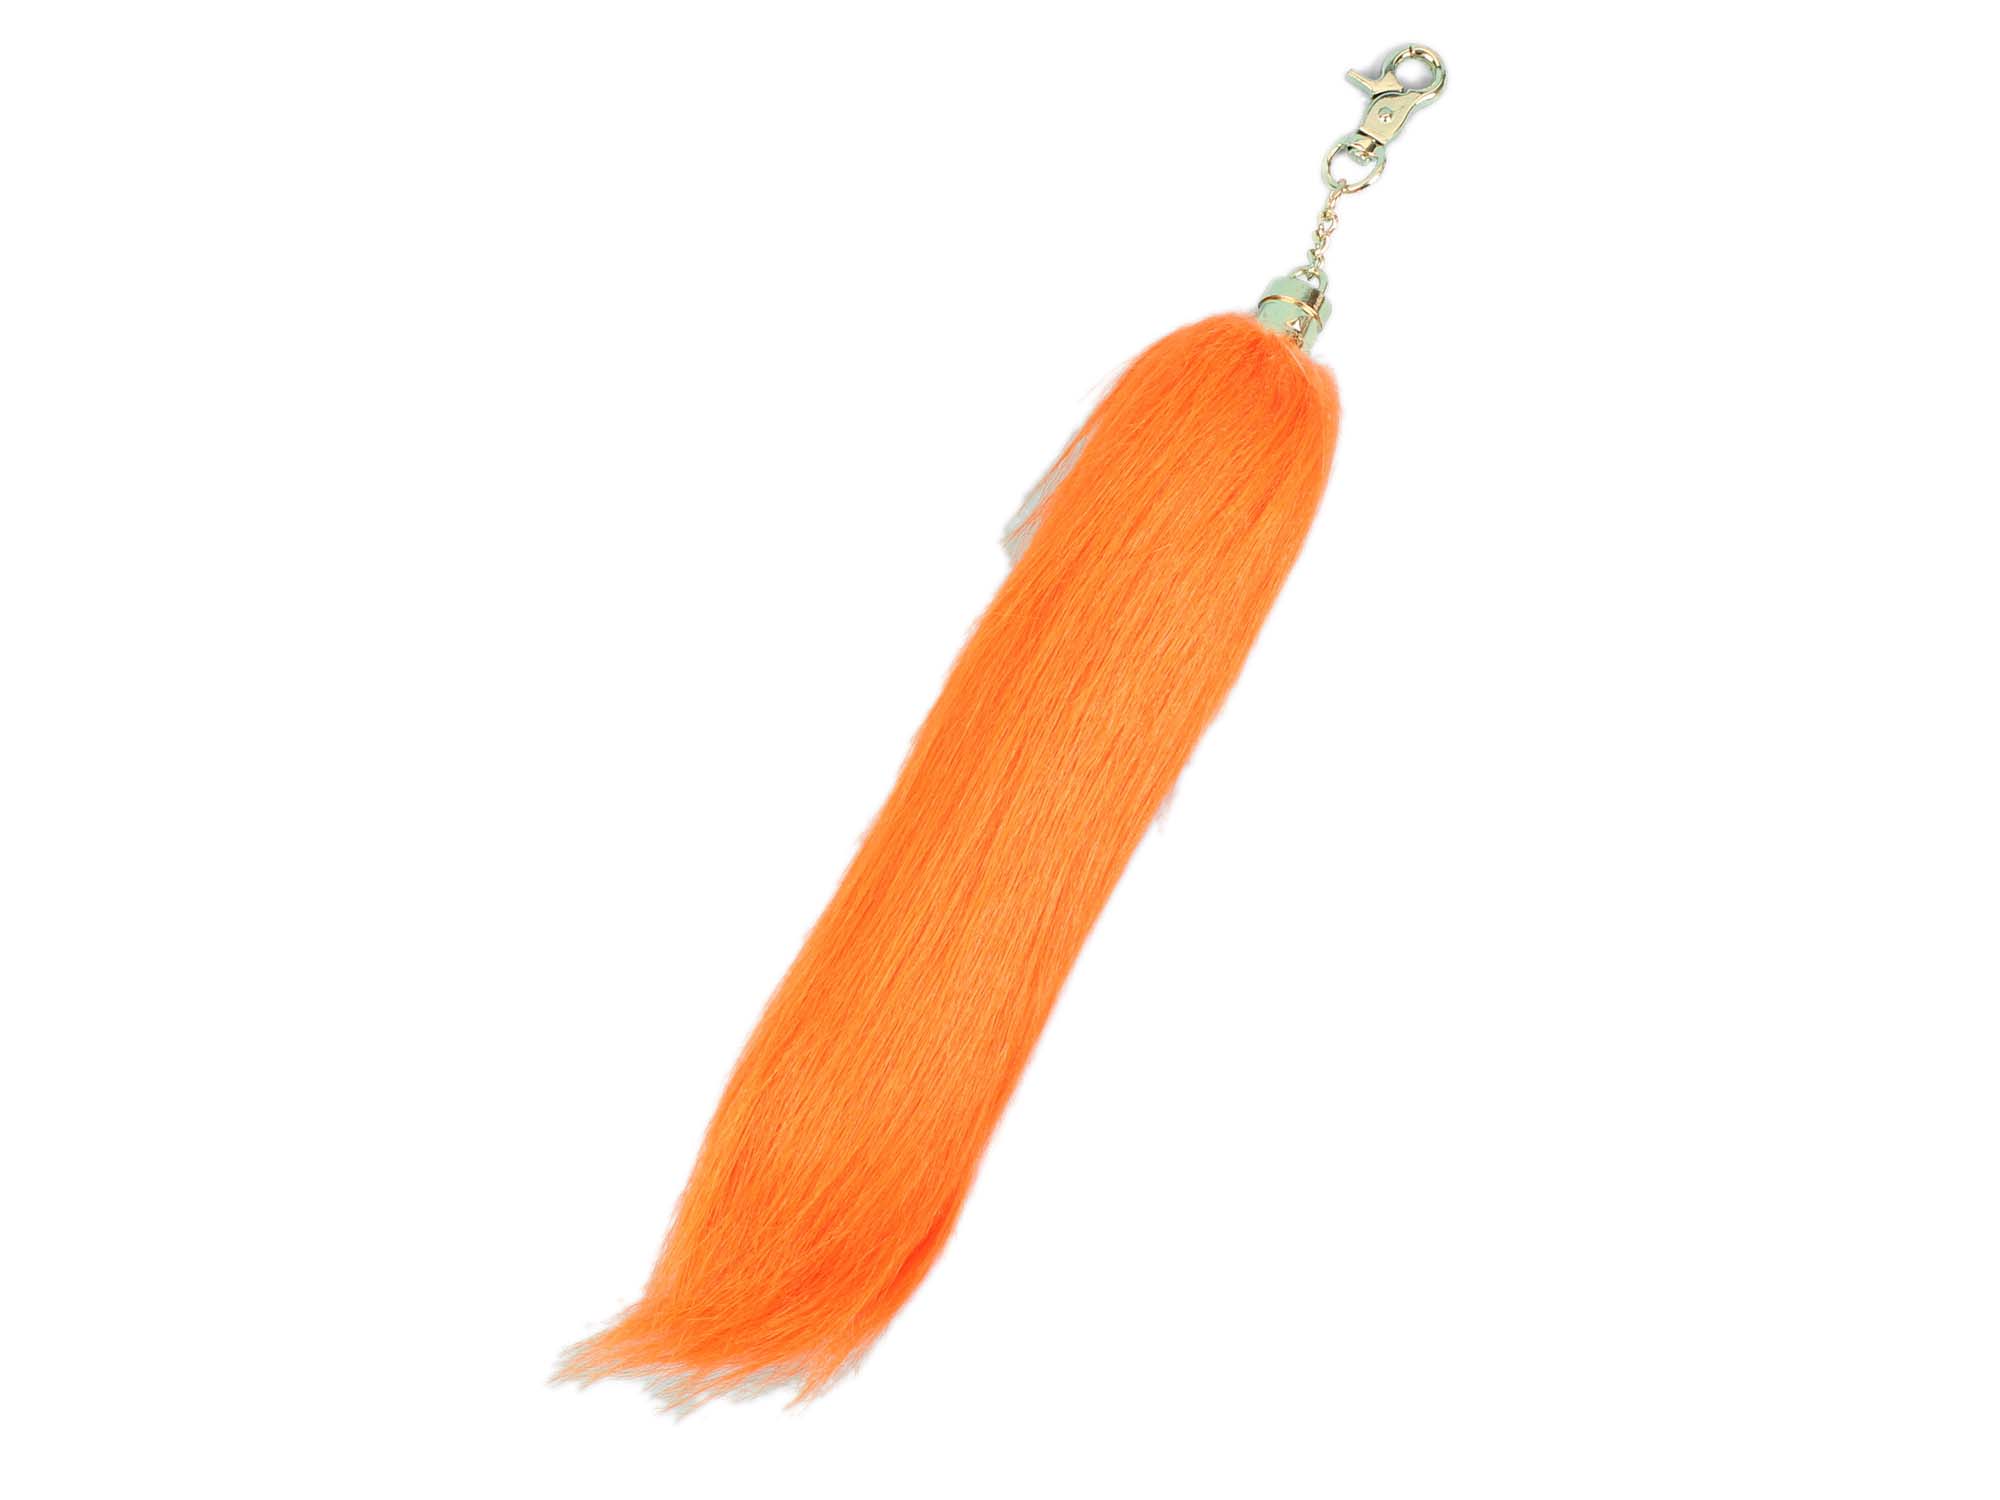 Imitation Fox Tail Keychain: Orange fake fox tail keychains, reproduction fox tail keychains